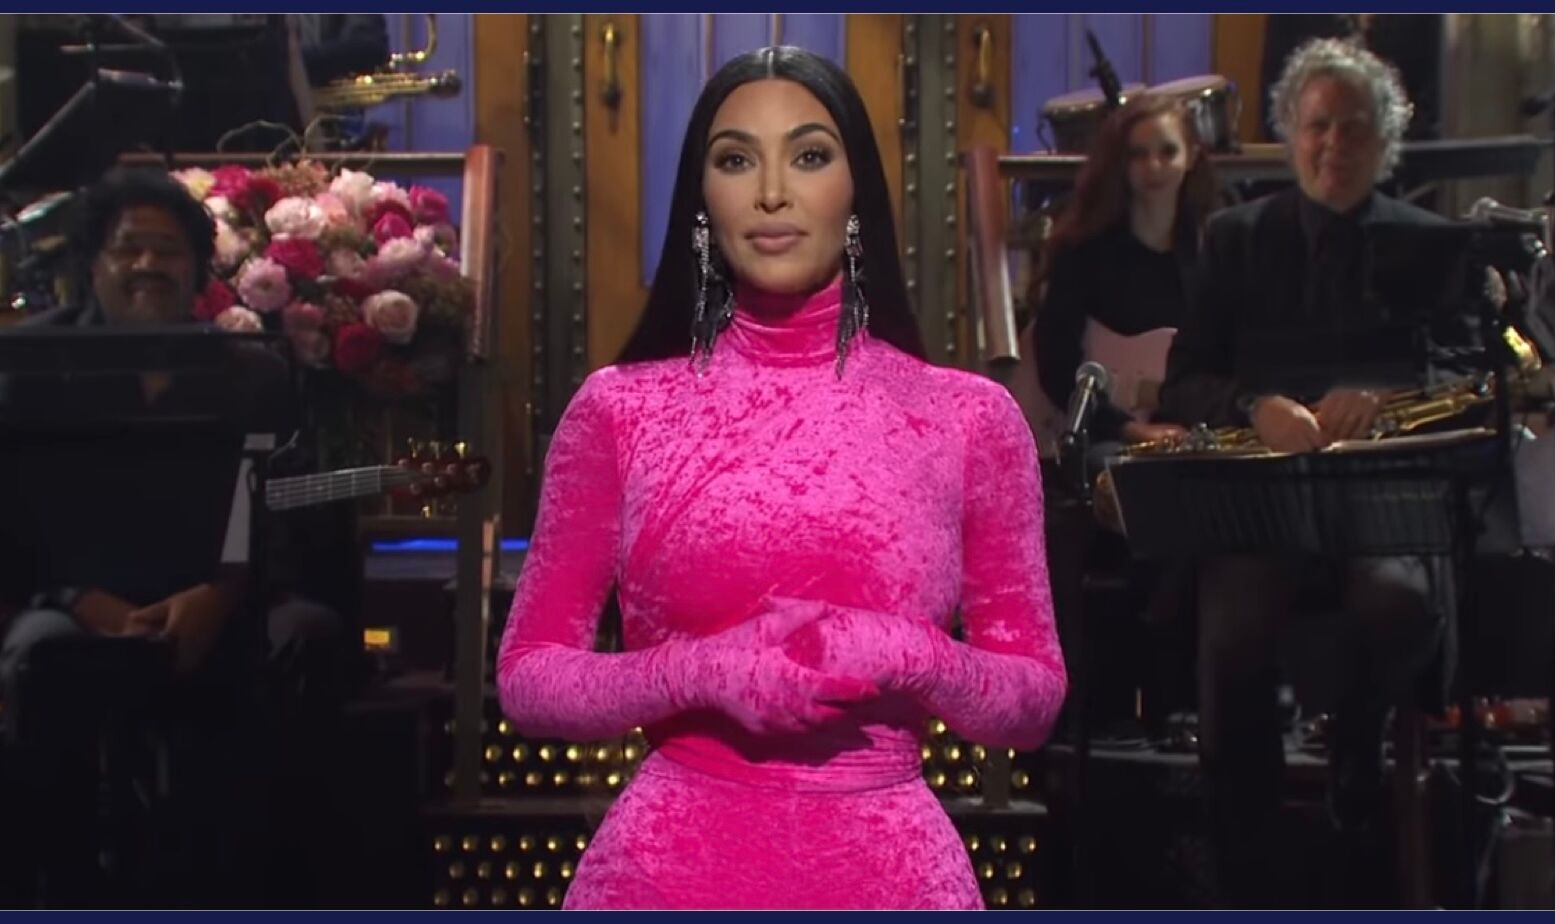 Kim Kardashian West hosting "Saturday Night Live" wearing all pink